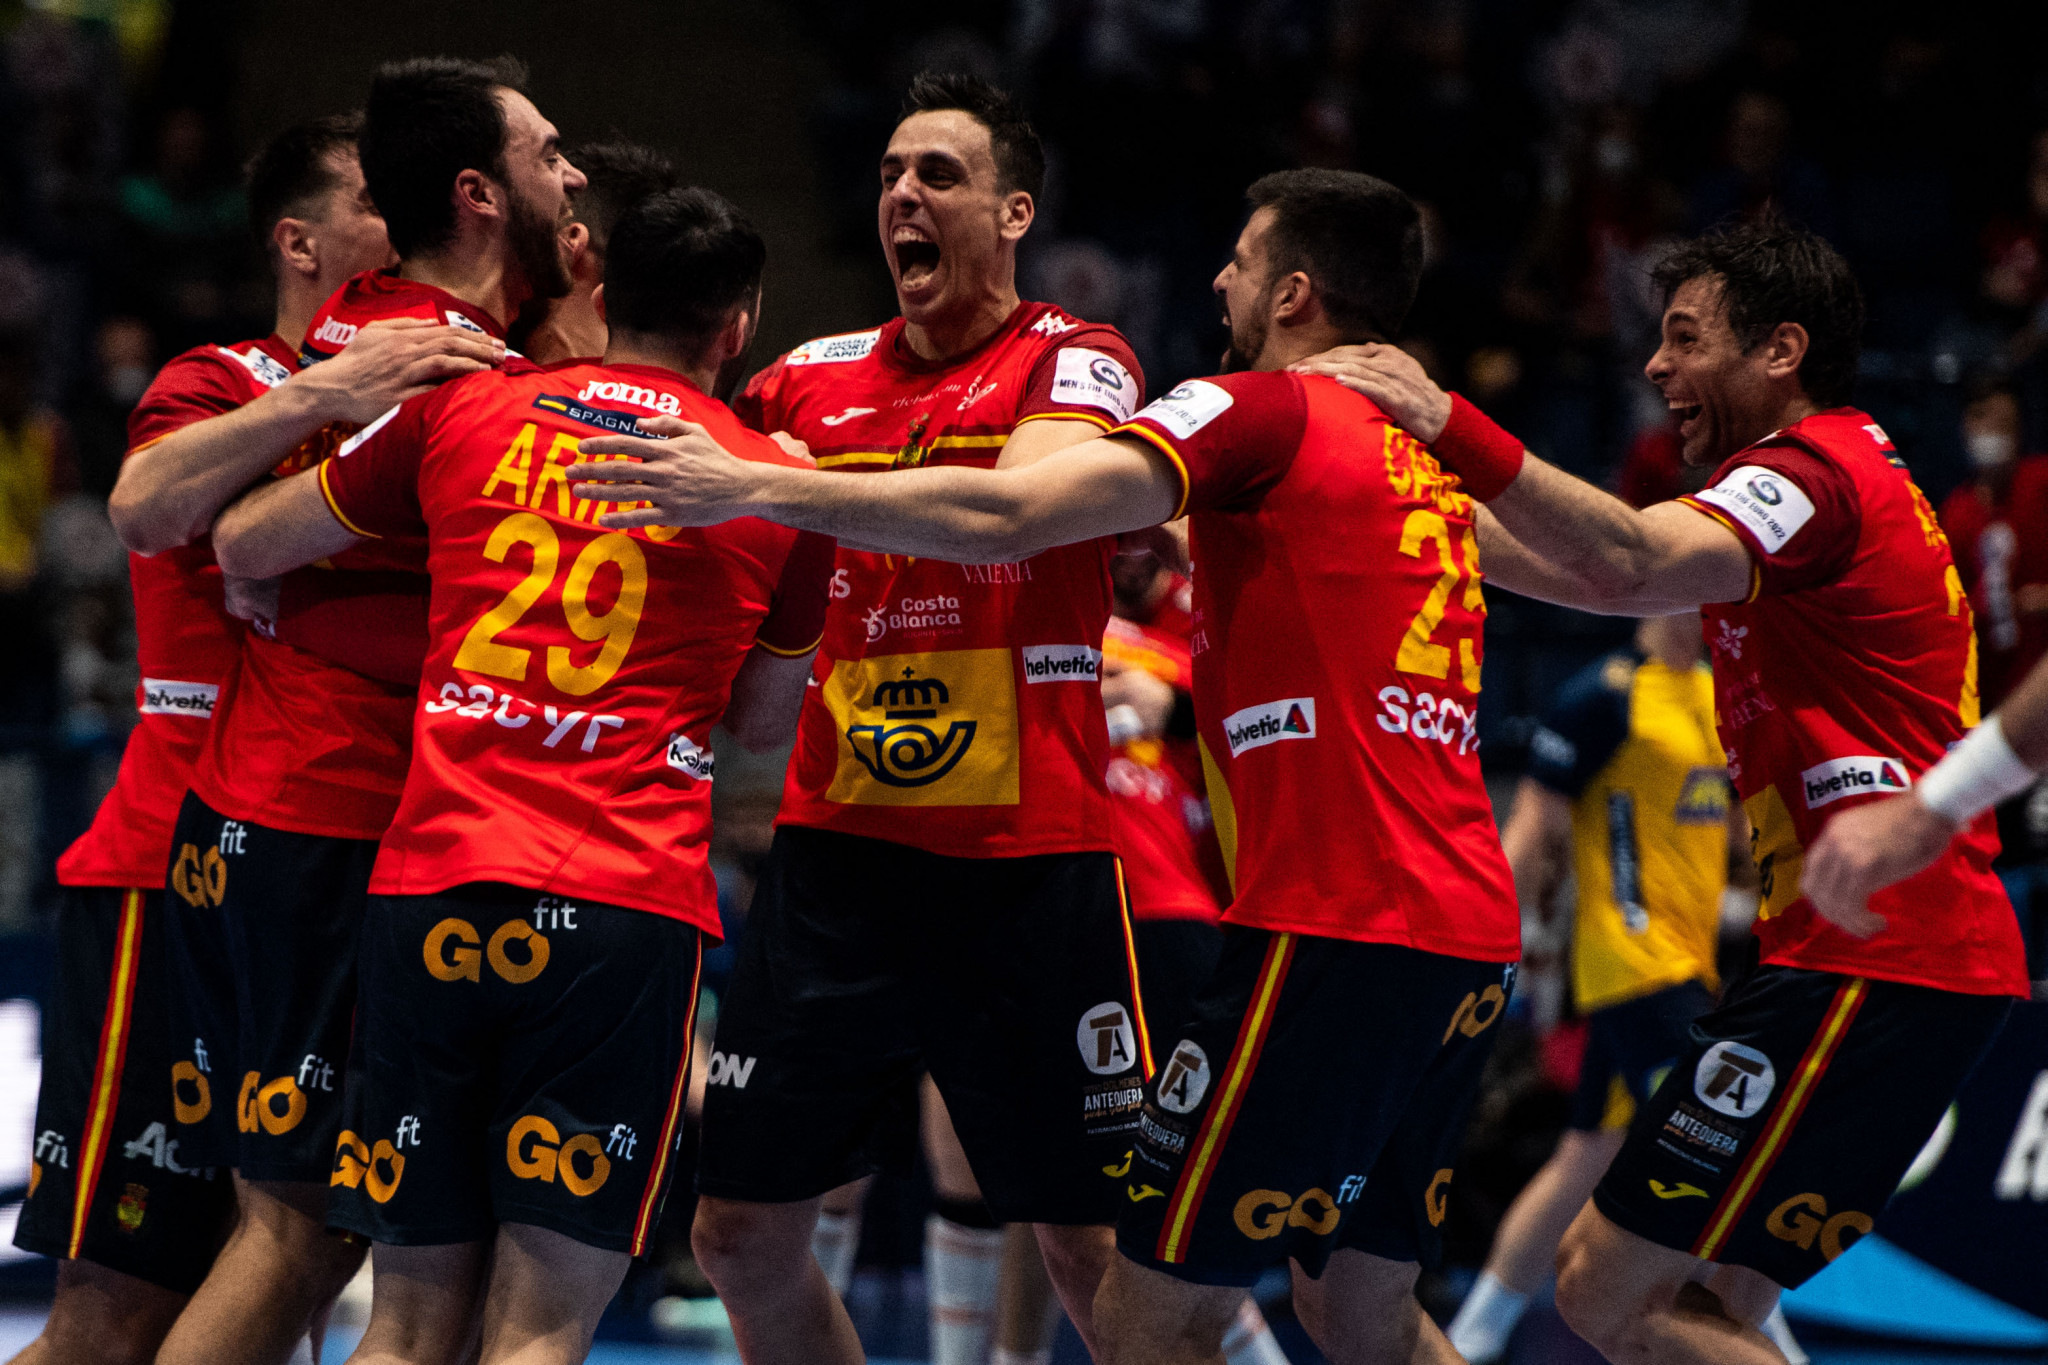 Holders Spain edge past Russia as main round of men’s European Handball Championship continues